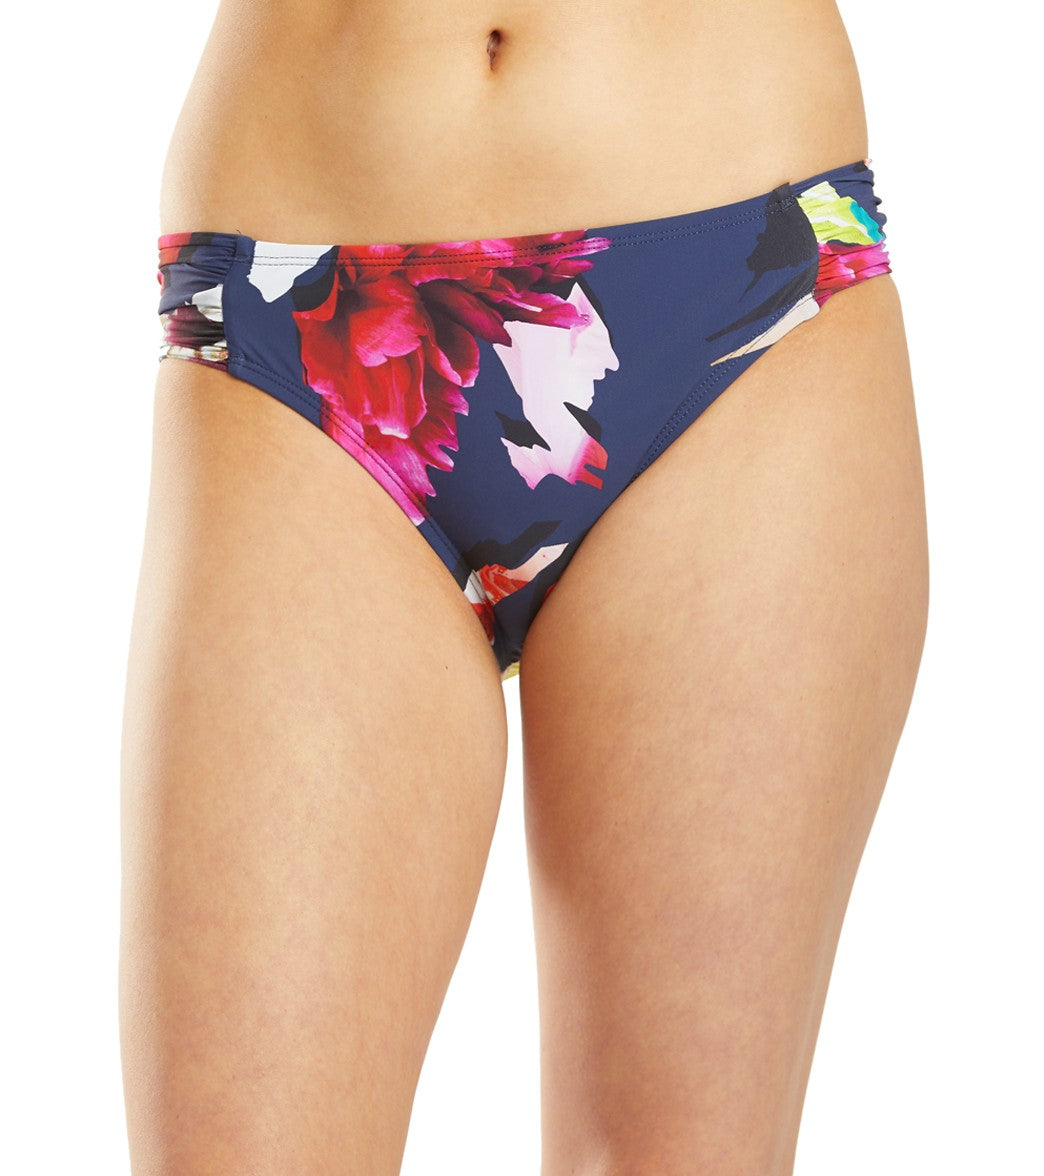 Kenneth Cole Dark Romance Hipster Bikini Bottom - Multi X-Small - Swimoutlet.com